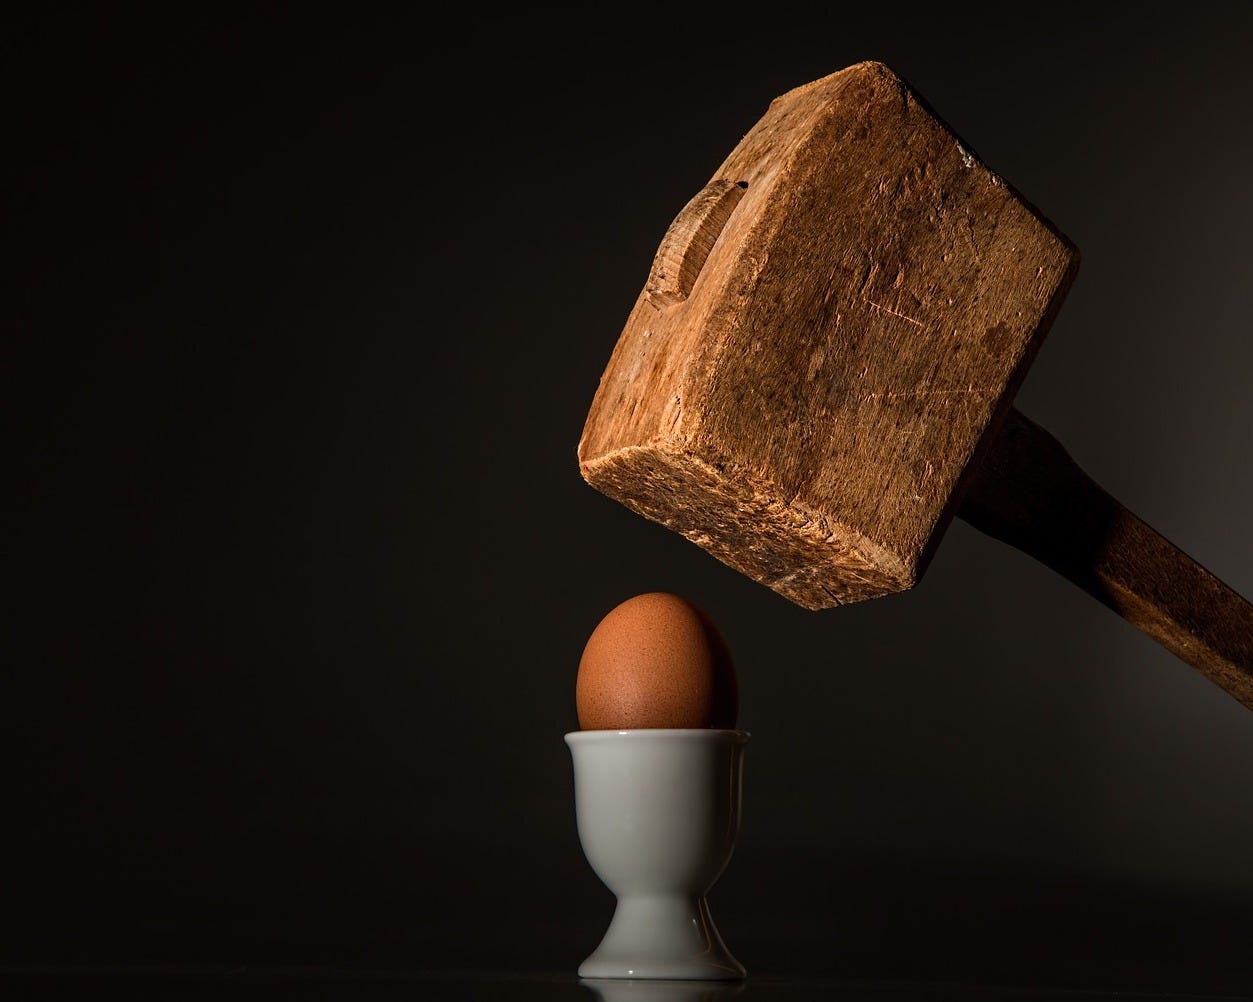 Relationship on eggshells